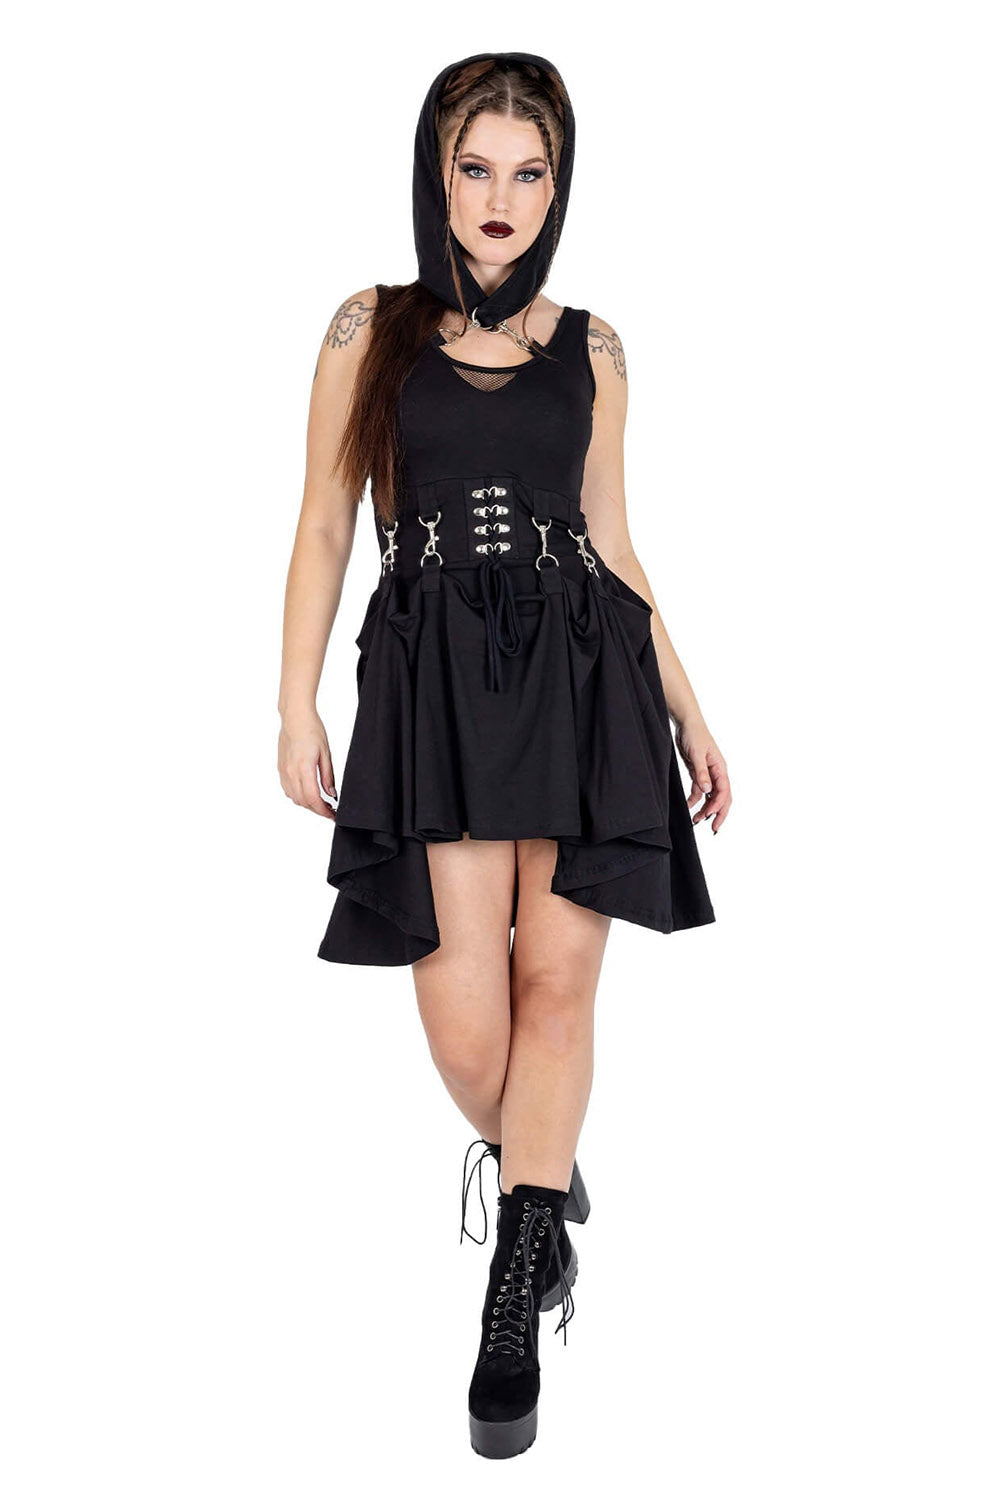 black bustle goth dress